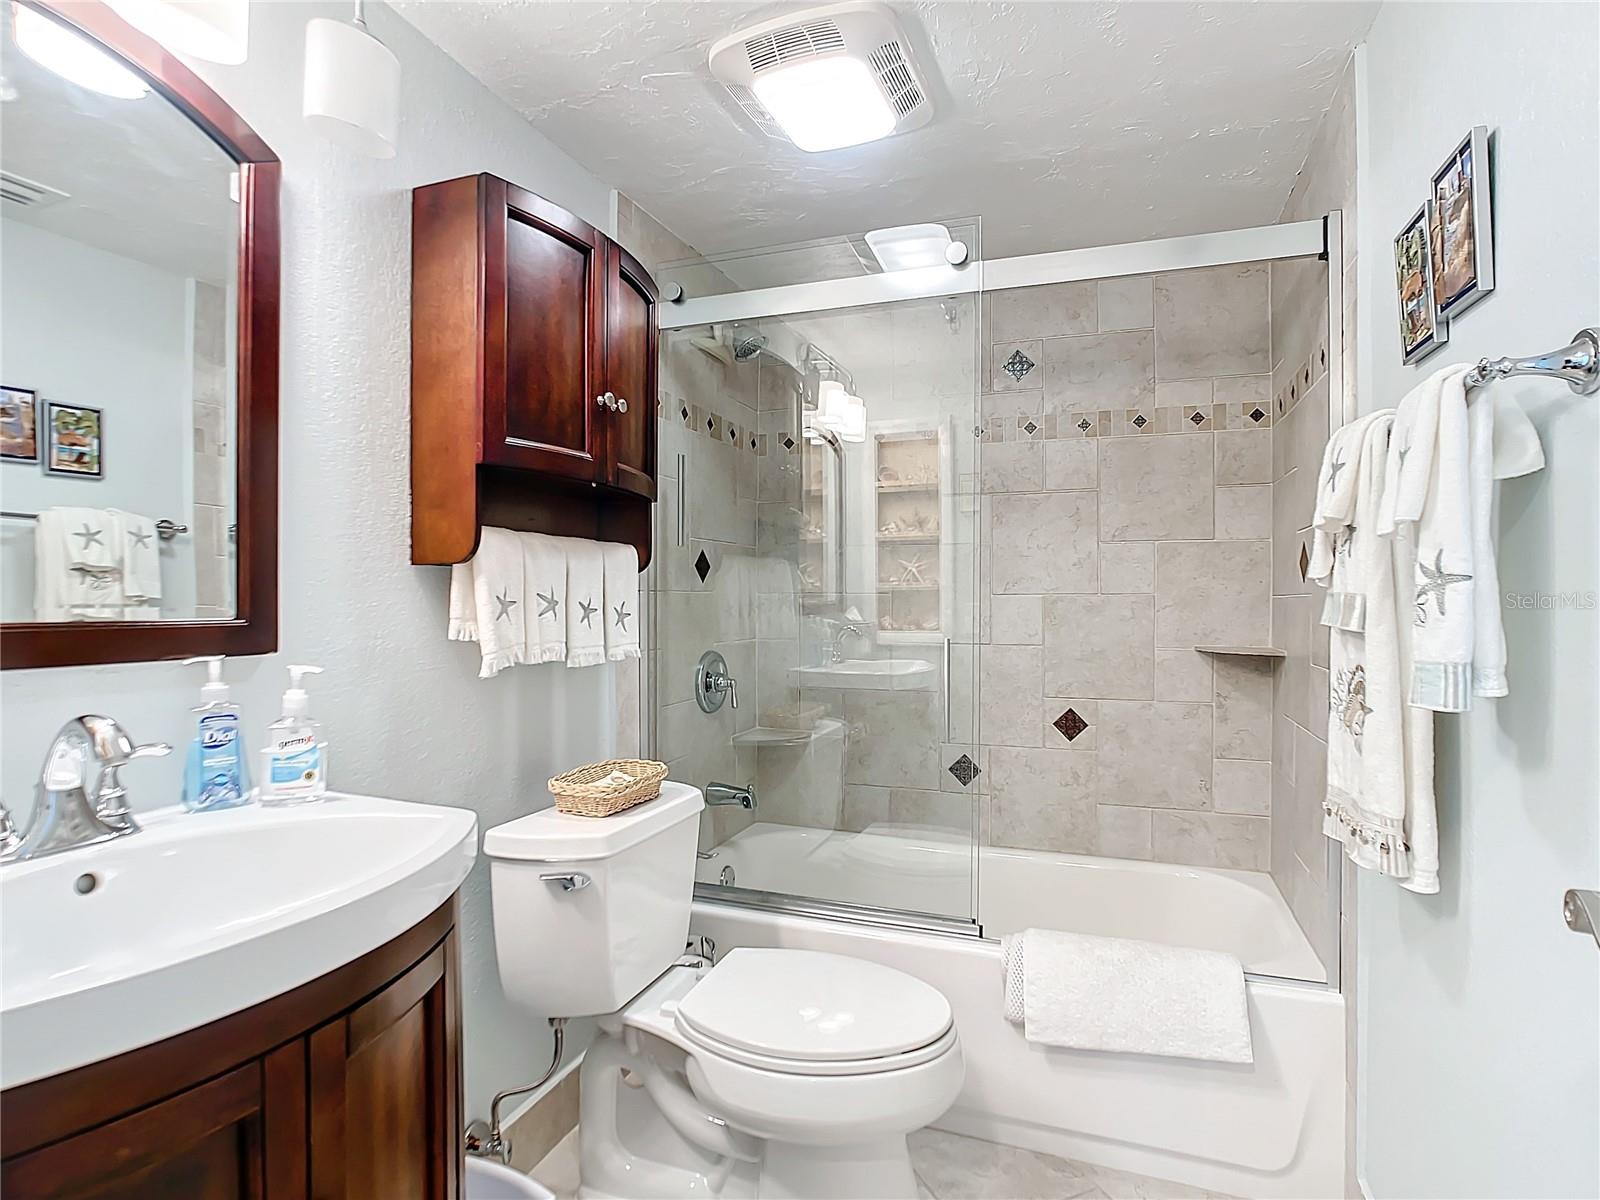 Hall bathroom with shower/tub combo.